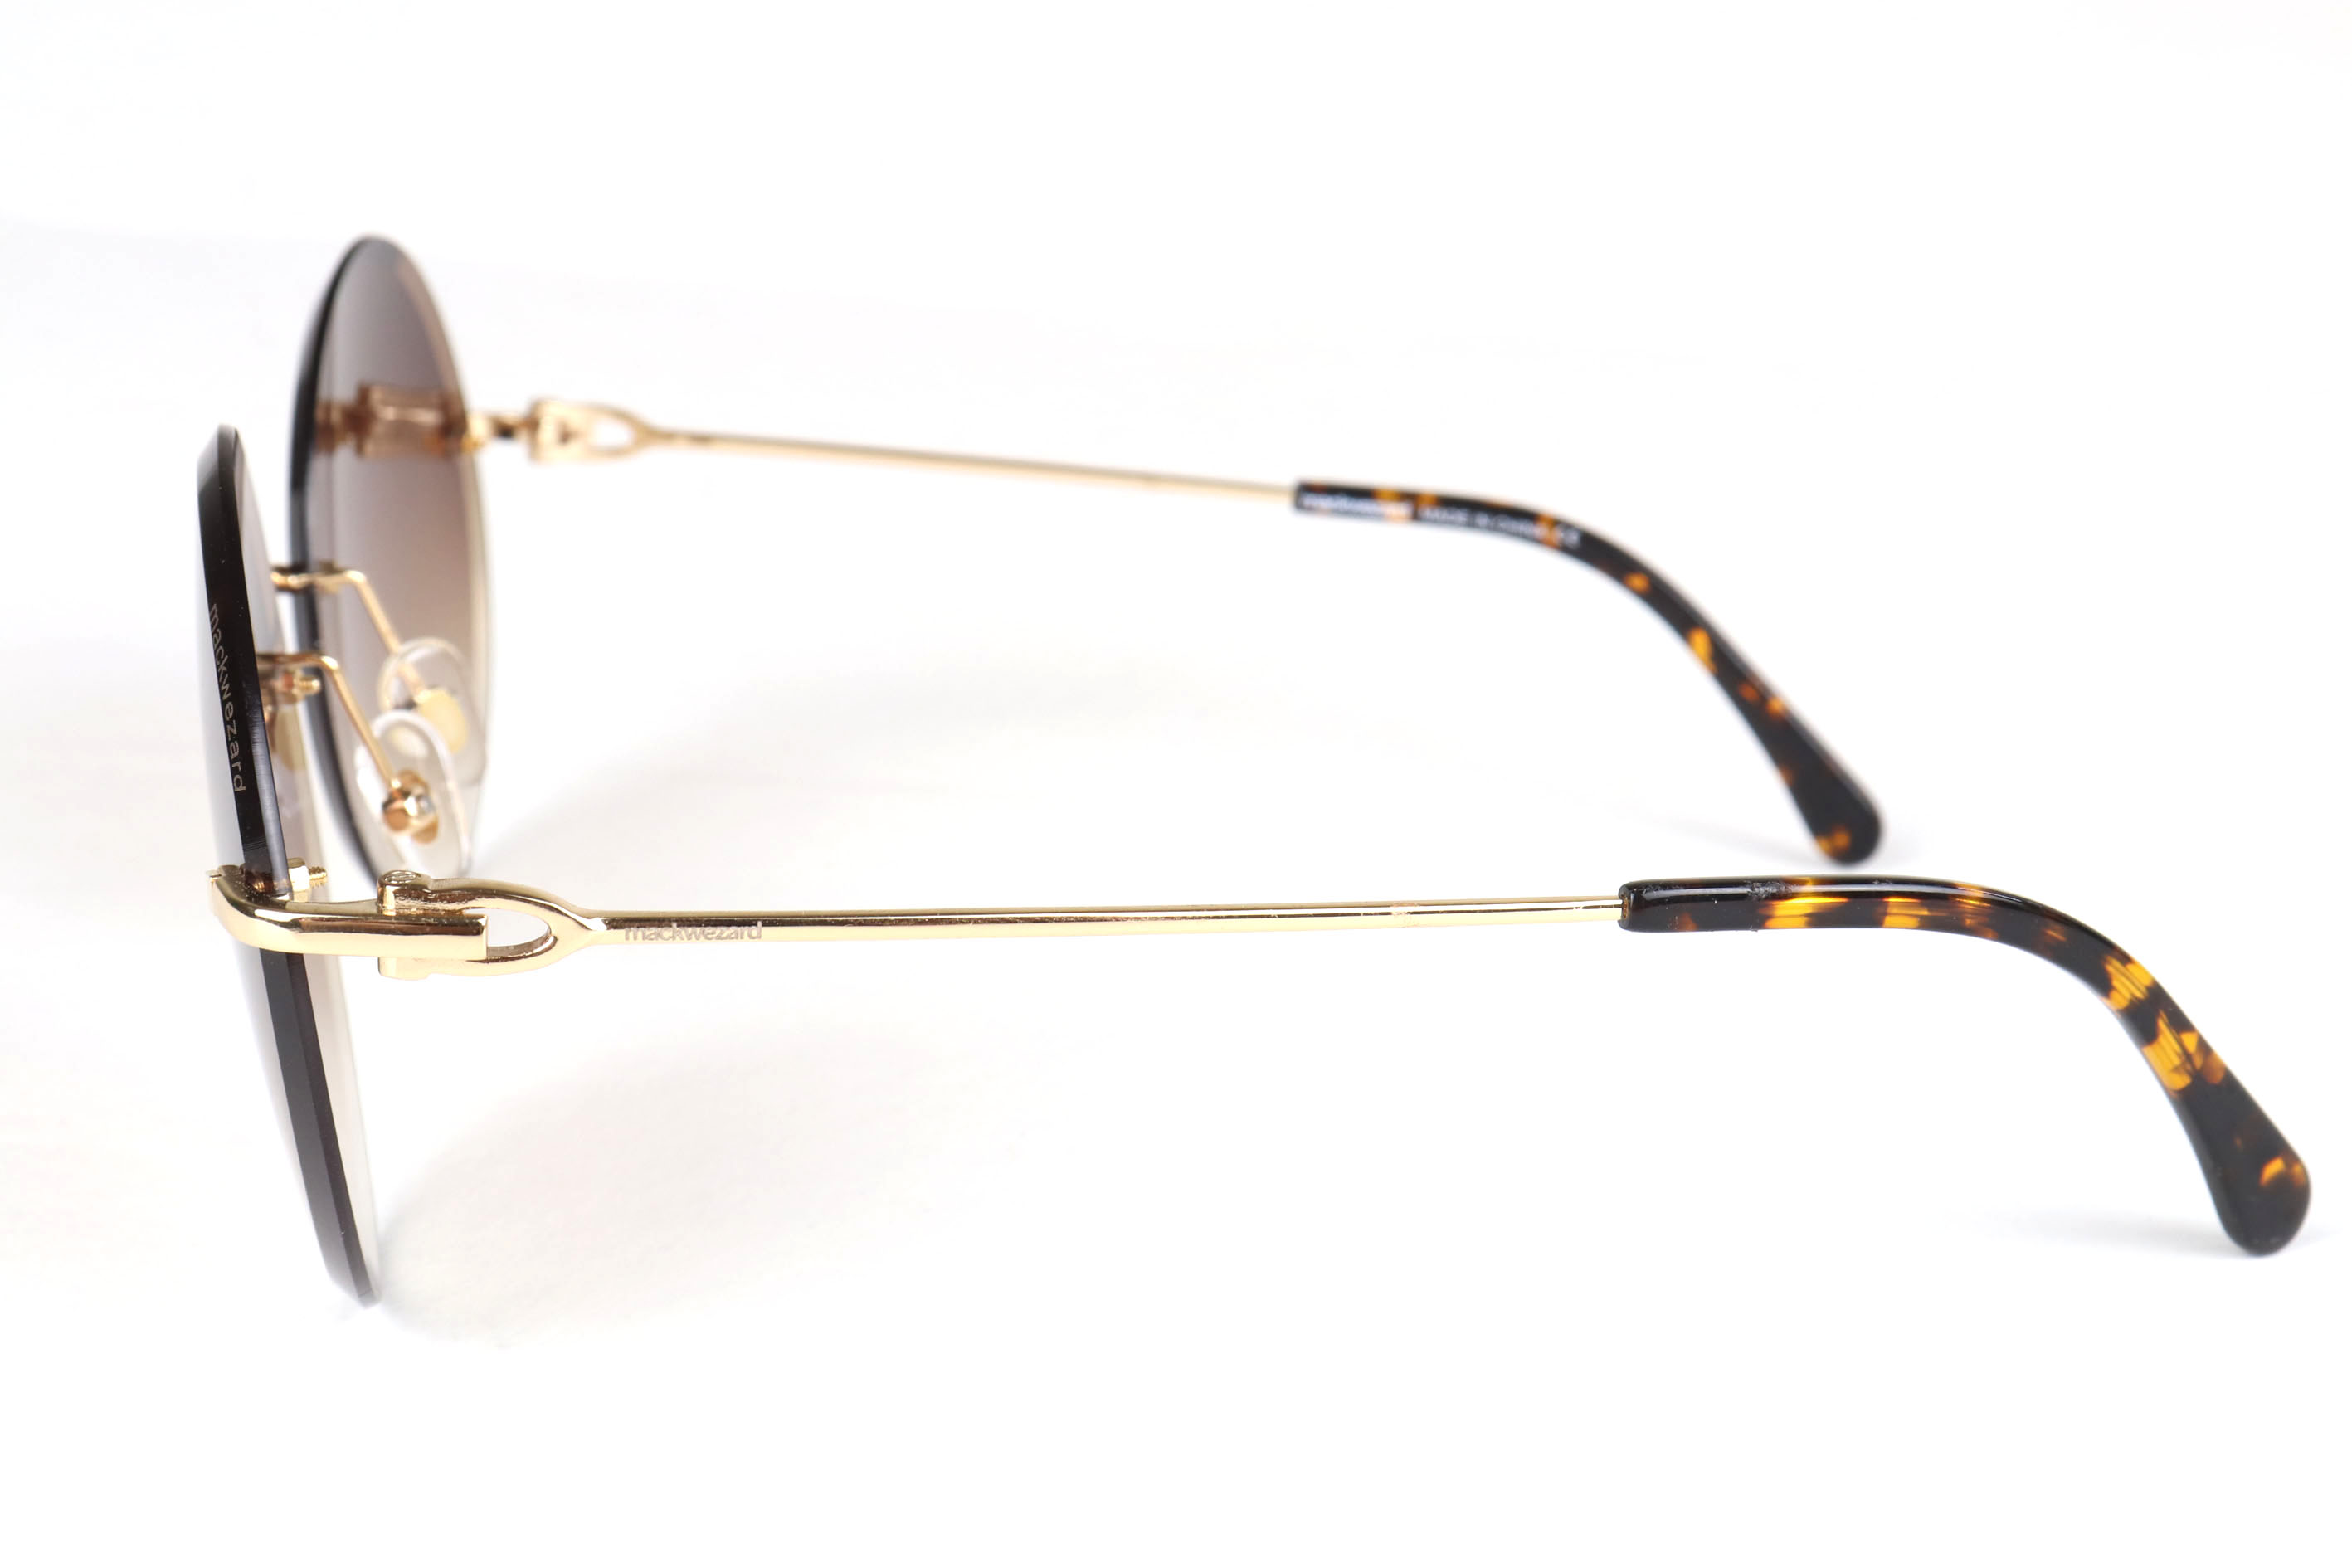 Mackwezard Sunglasses -CT002-C1-39-18-145